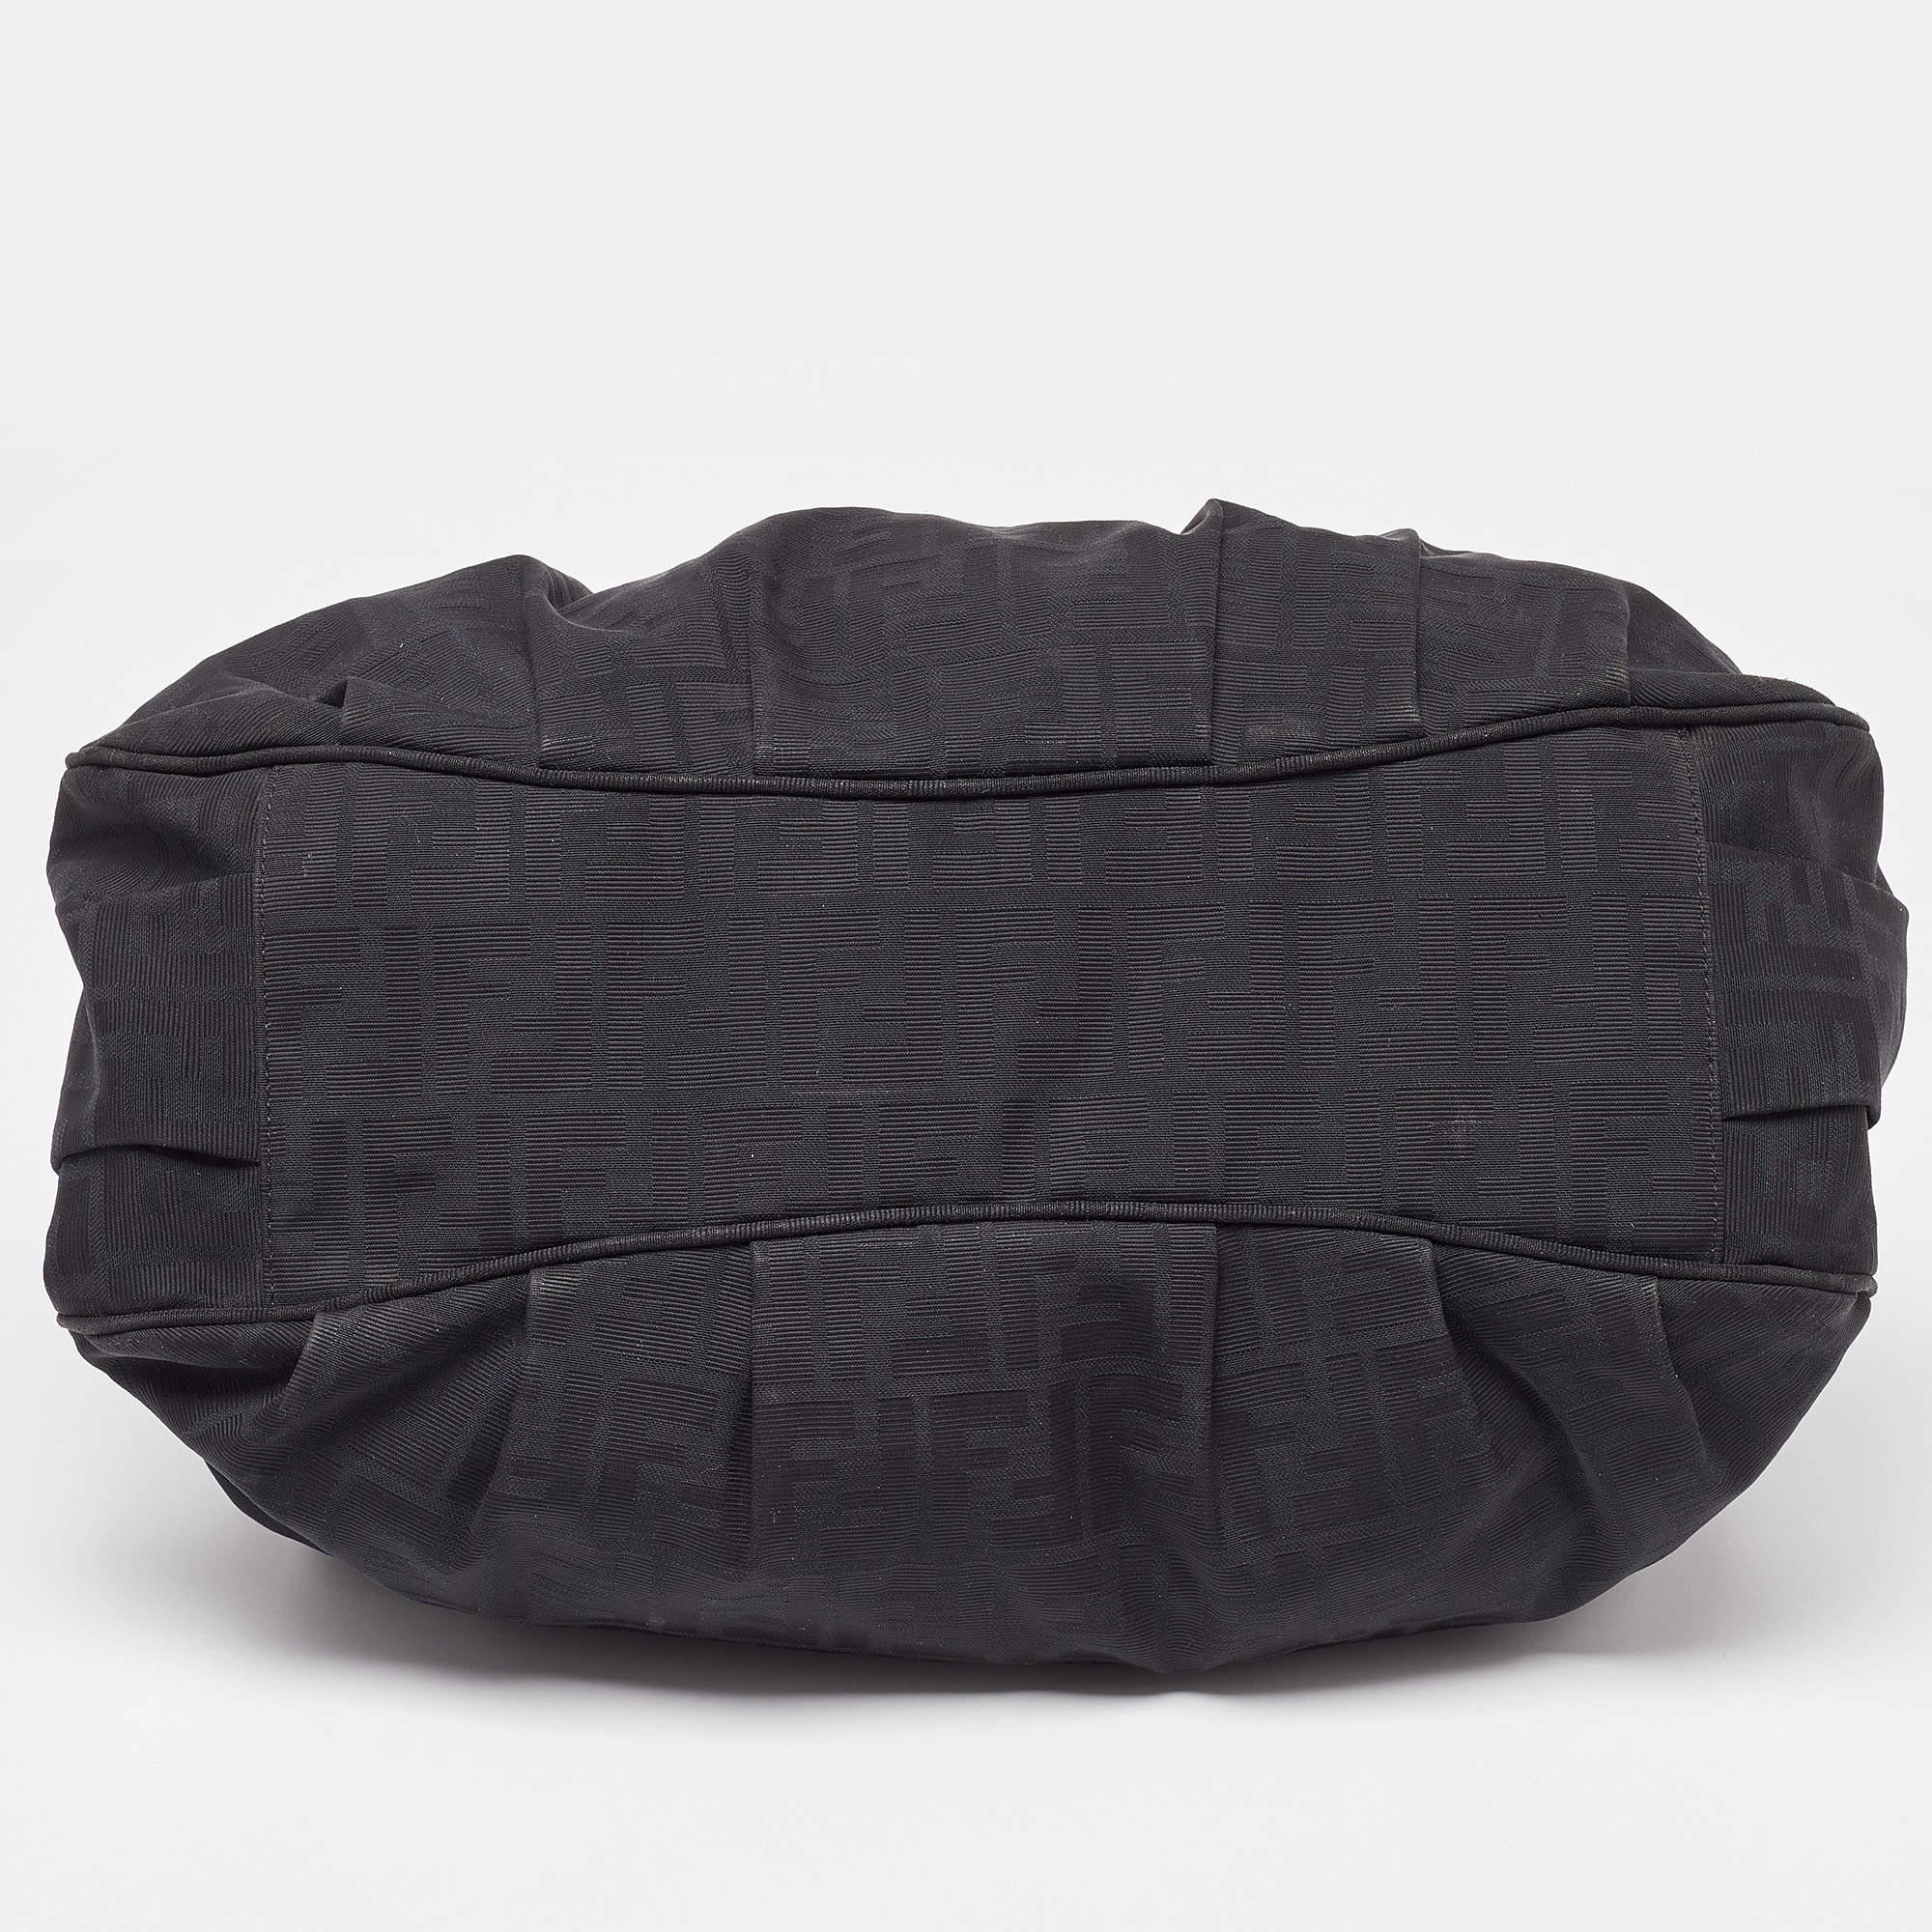 Fendi Black Zucca Canvas and Patent Leather Mia Shoulder Bag For Sale 1